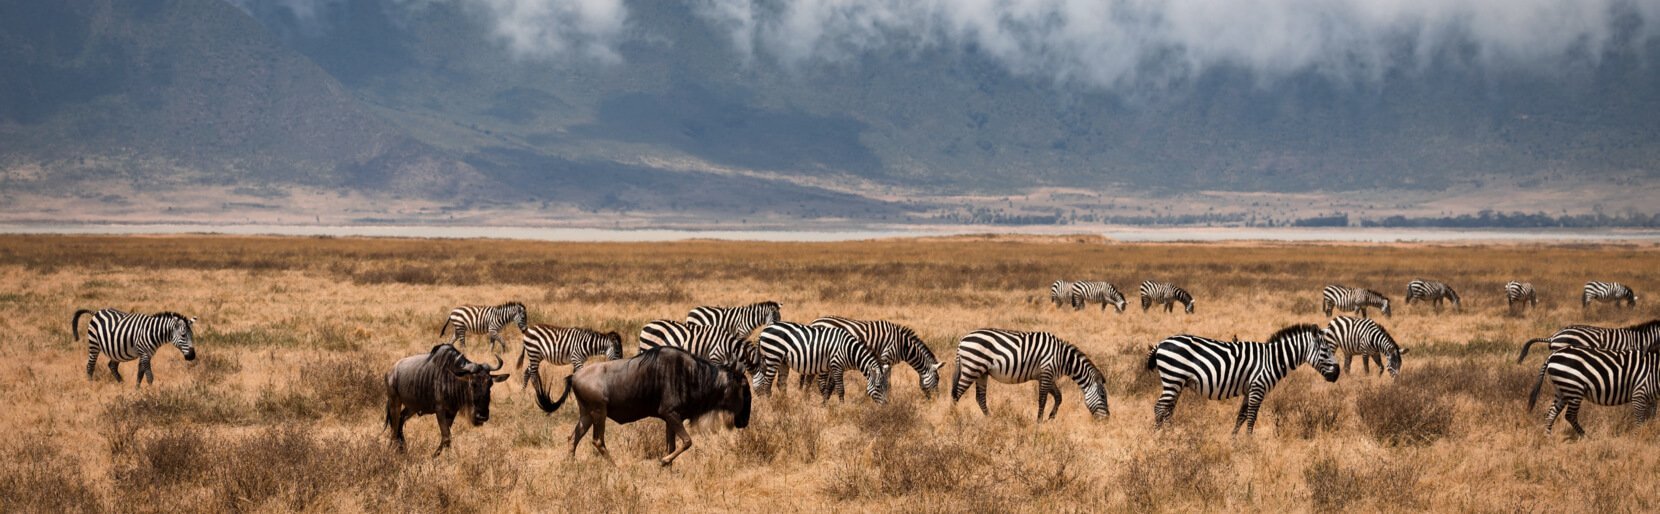 Zebrapaarden op de savanne